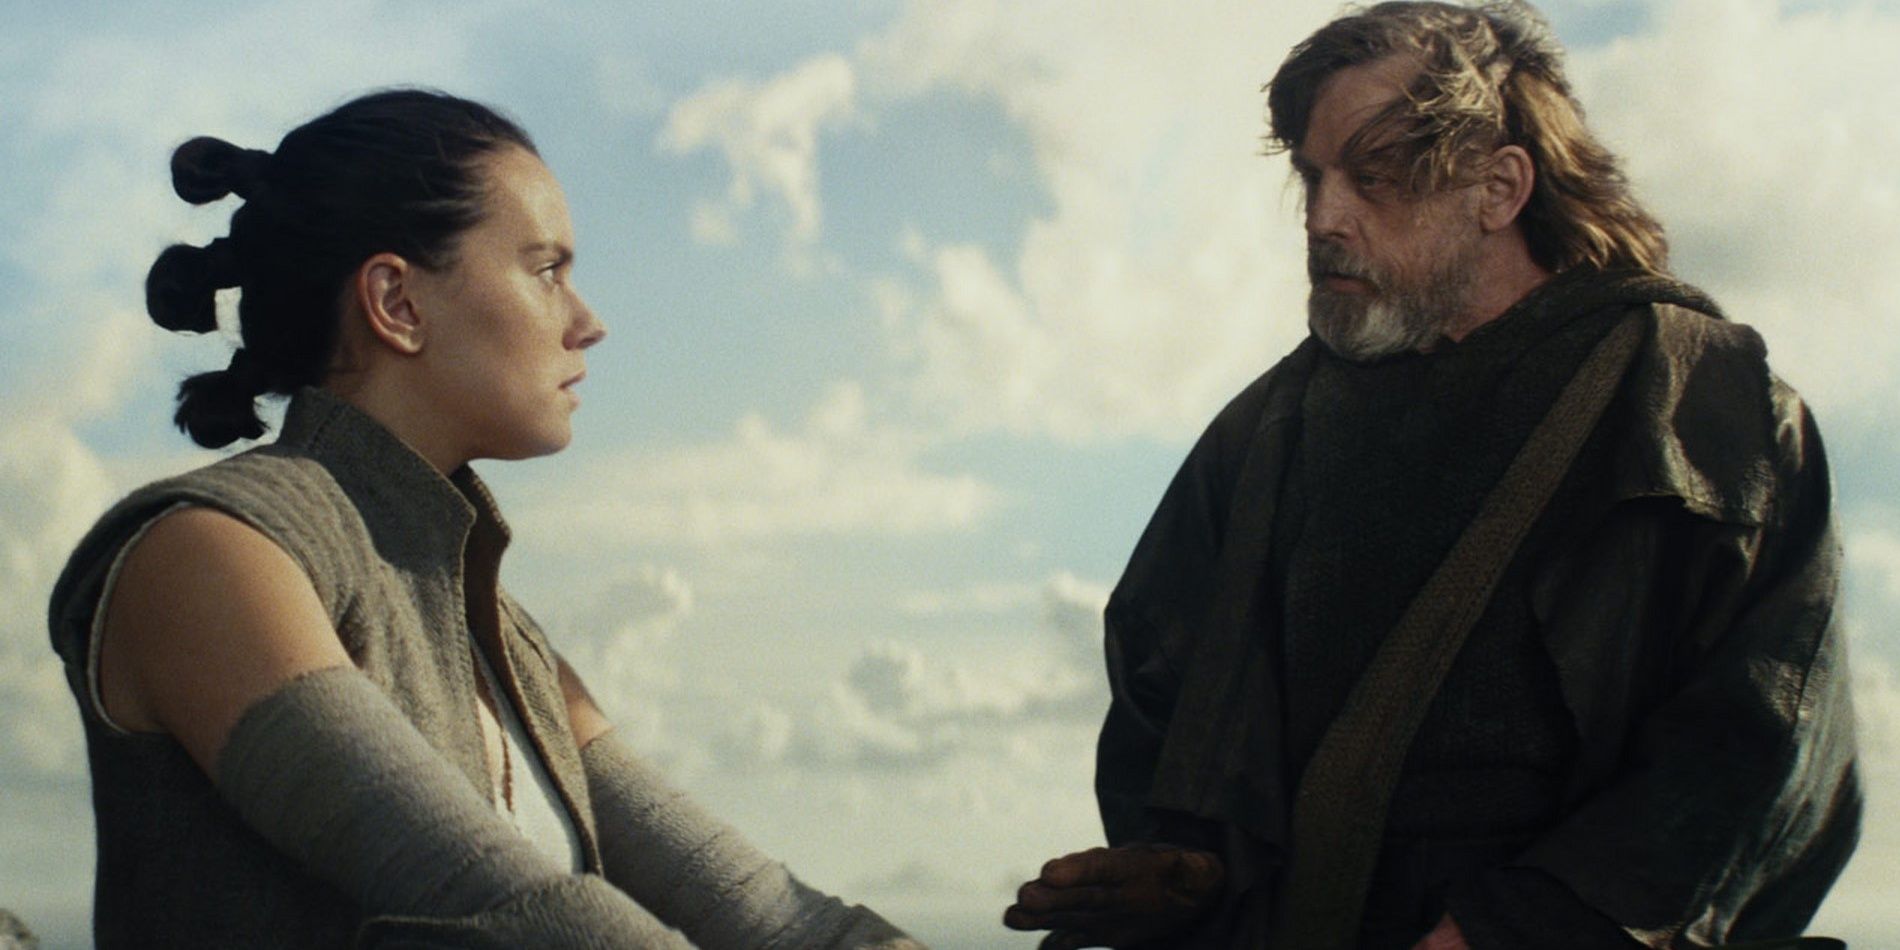 Rey observa Luke enquanto ele a ensina sobre Ahch-To